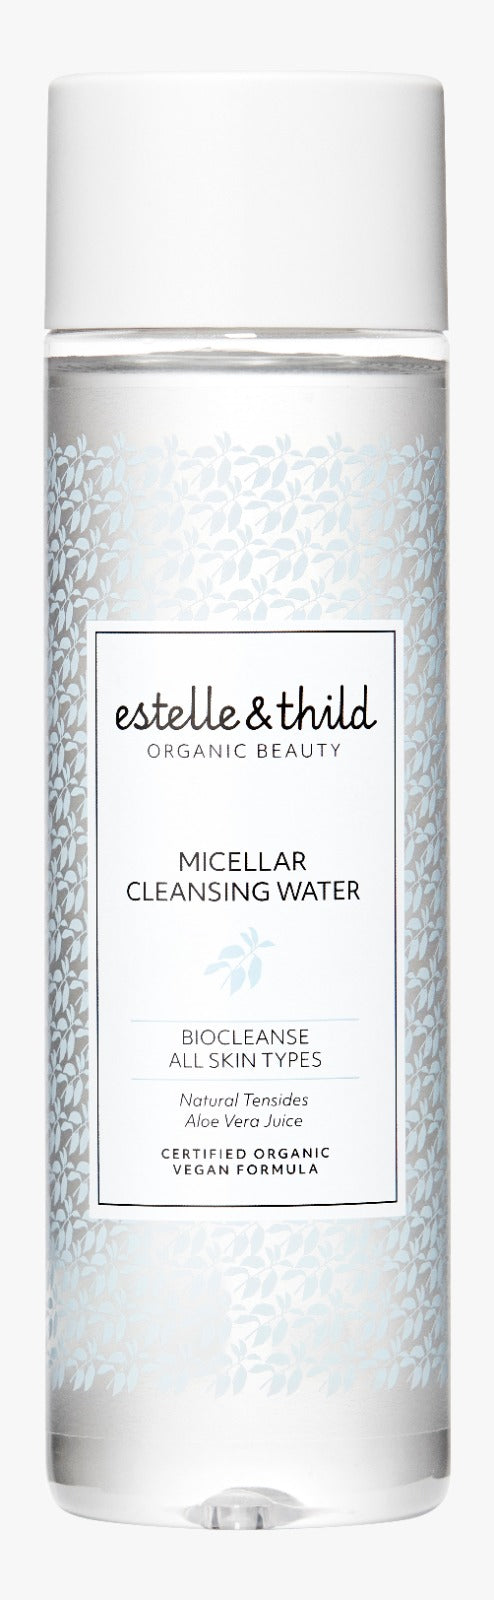 ESTELLE & THILD 卸妝潔膚水 Micellar Cleansing Water [250ml]